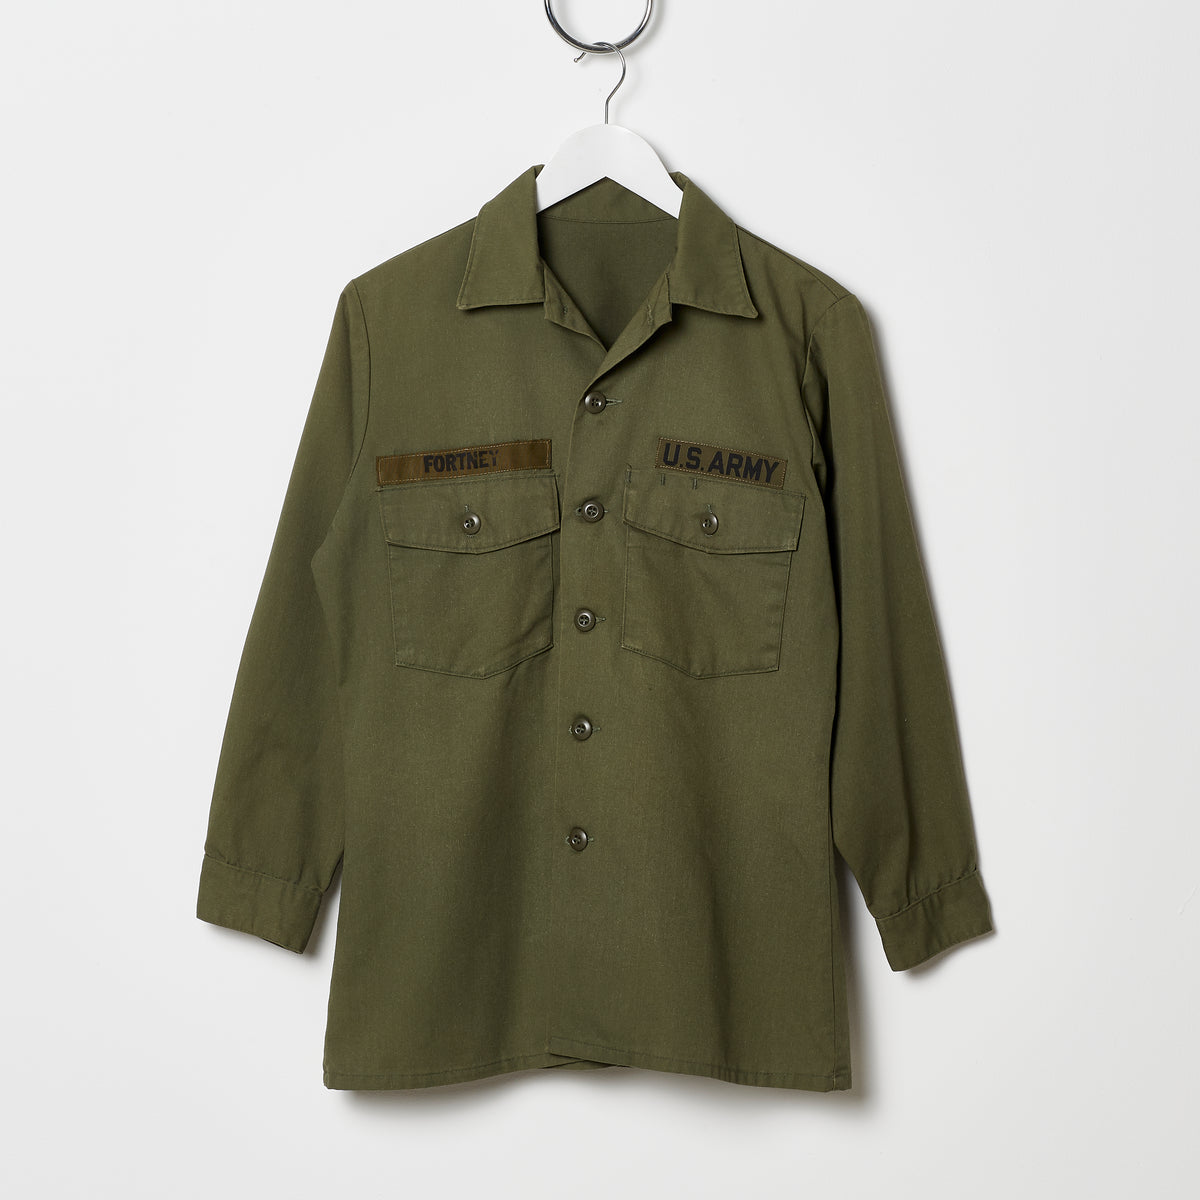 Vintage OG-507 Fatigue Shirt - US Army, Type 3